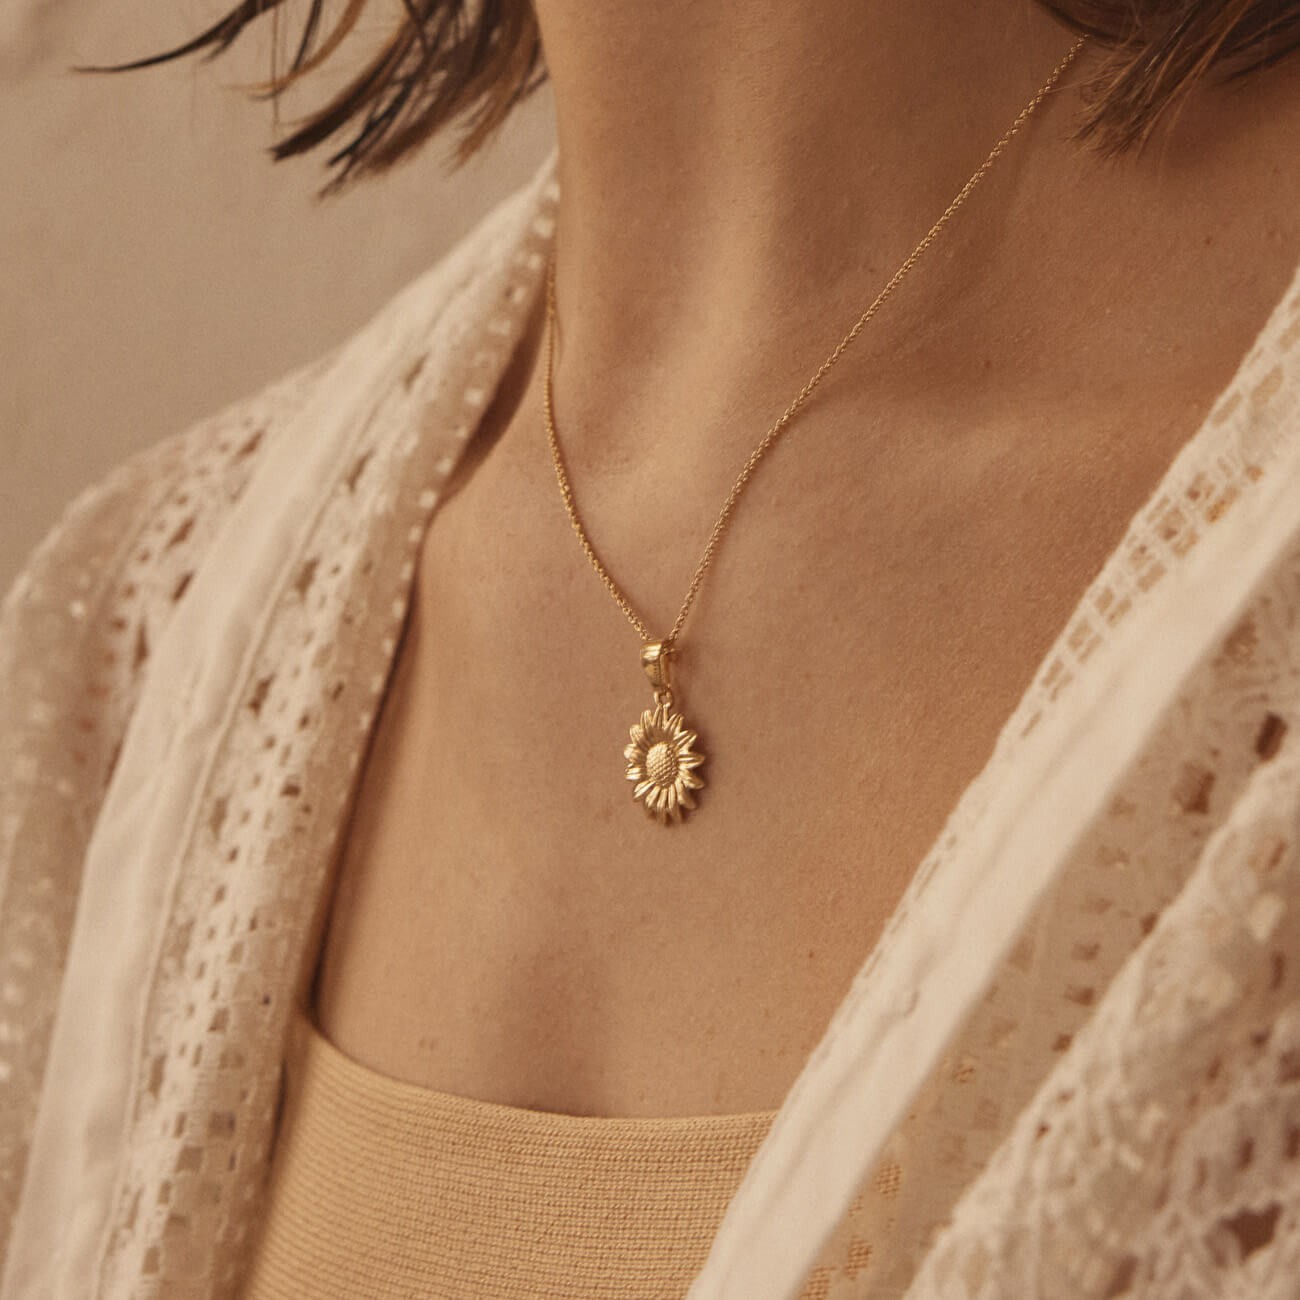 Silver sunflower necklace, AUGUSTYNKA x GIORRE